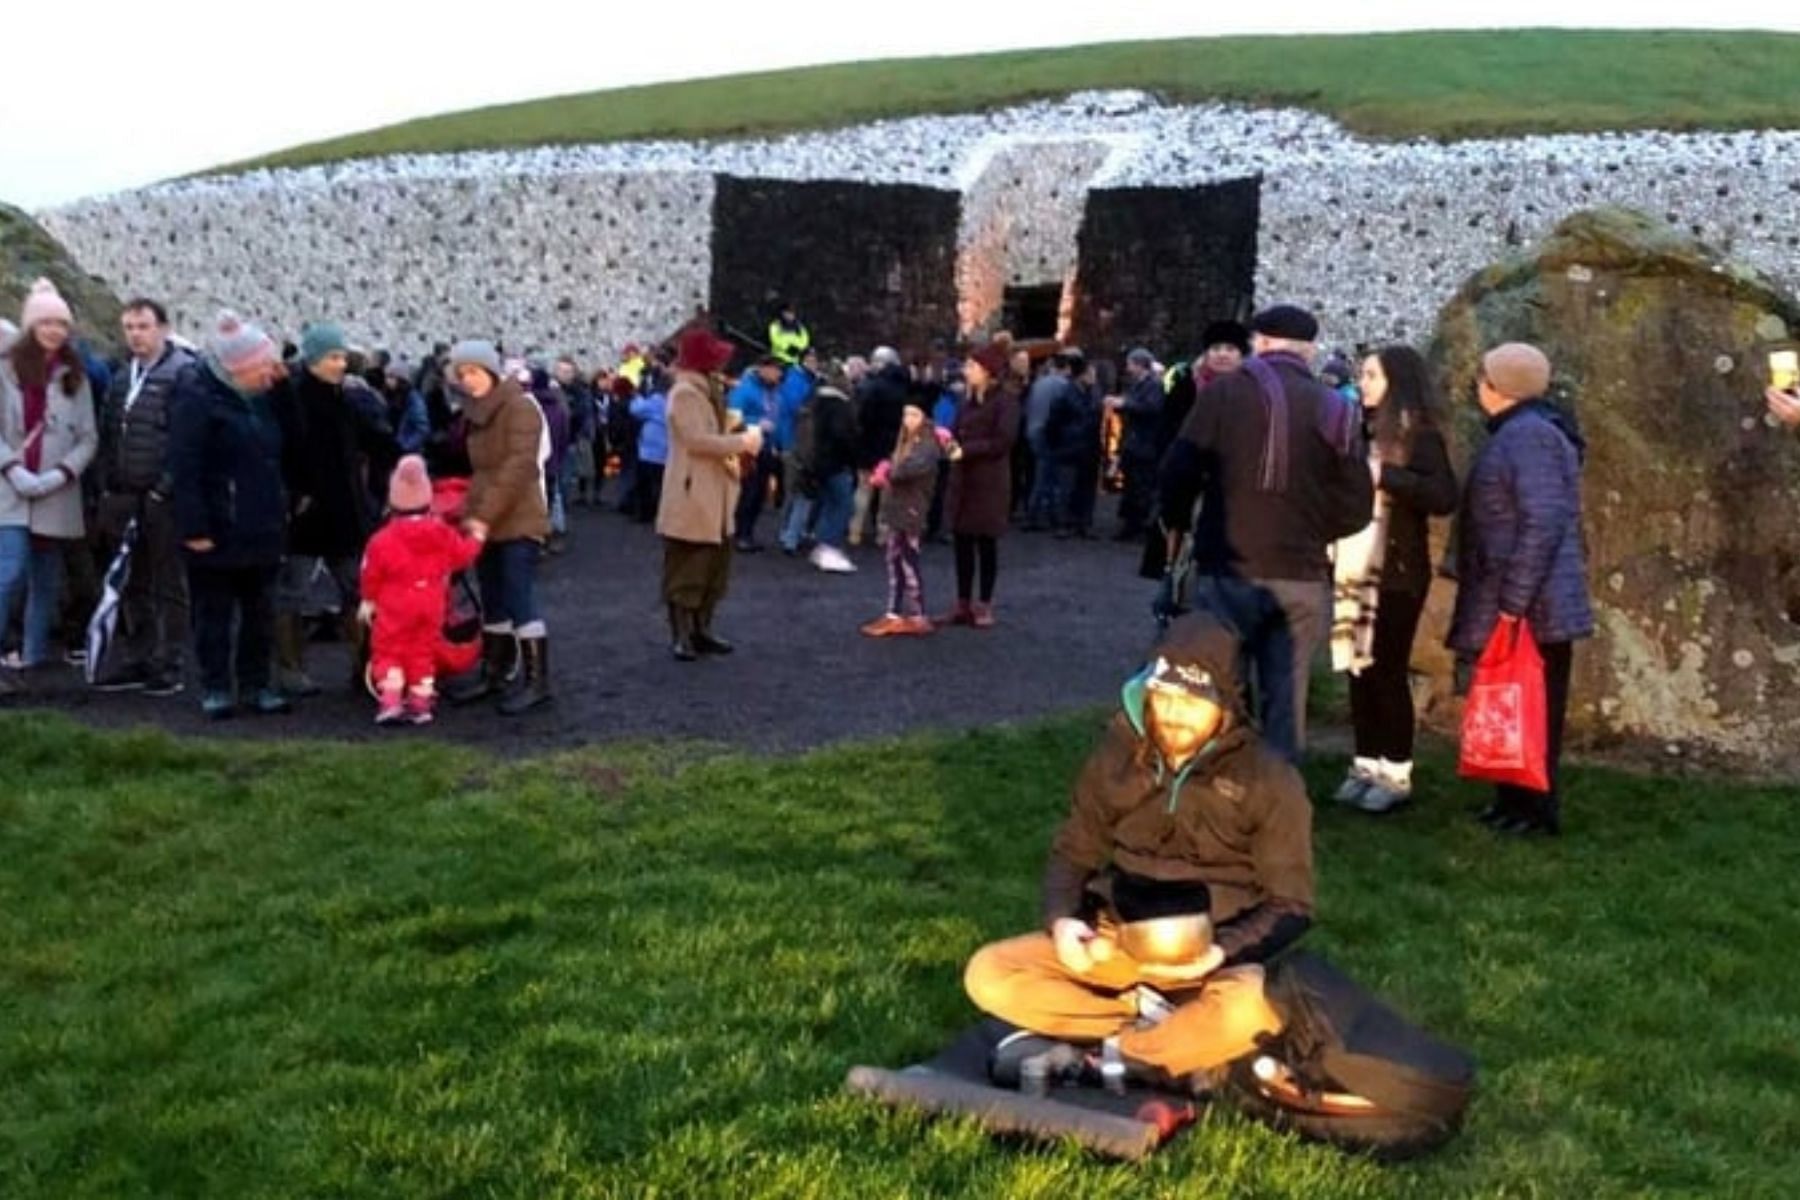 People gathered at Newgrange (Image via Philip Bromwell)